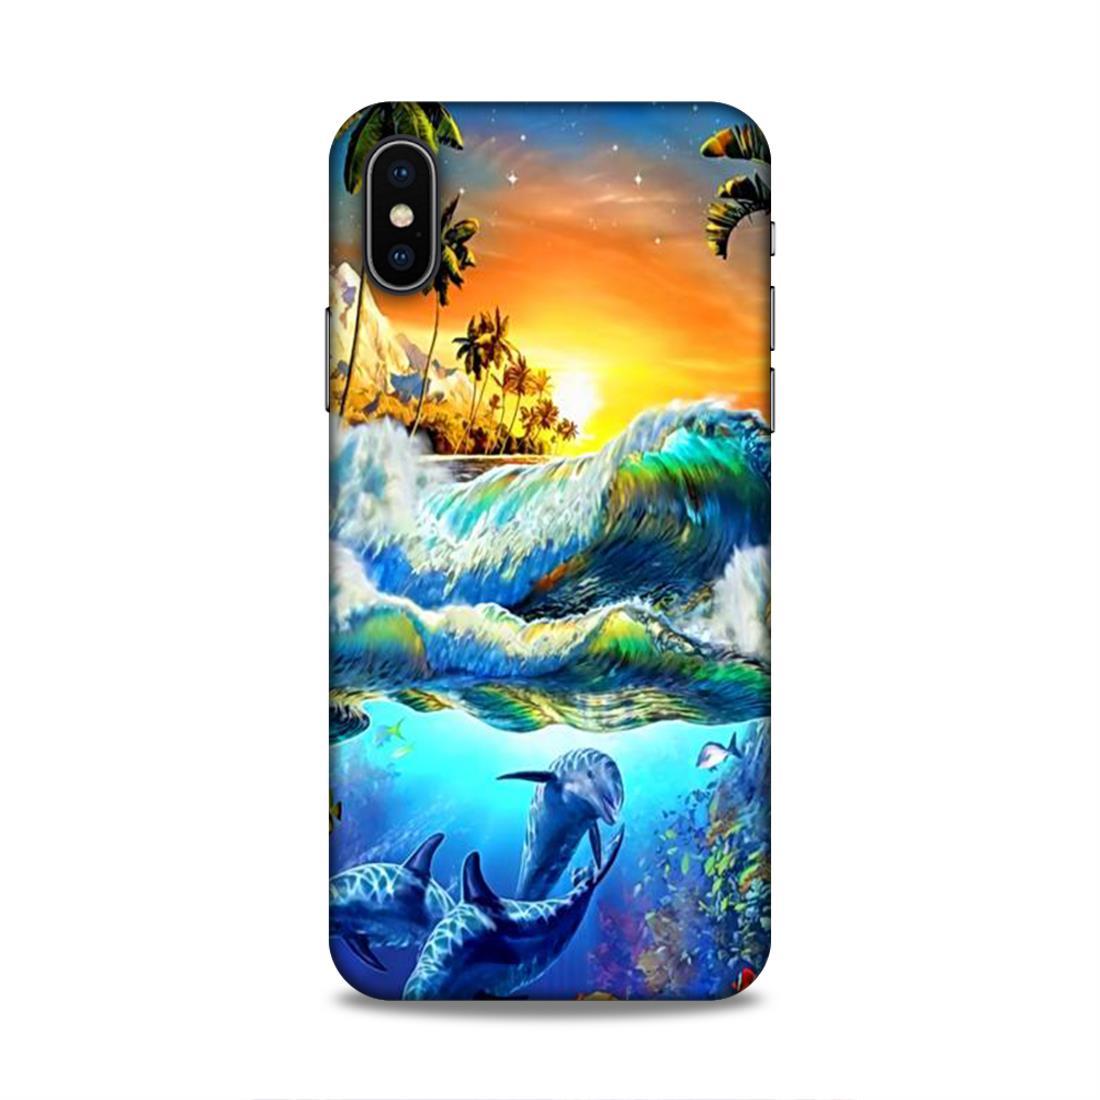 Sunrise Art iPhone X Phone Cover Case